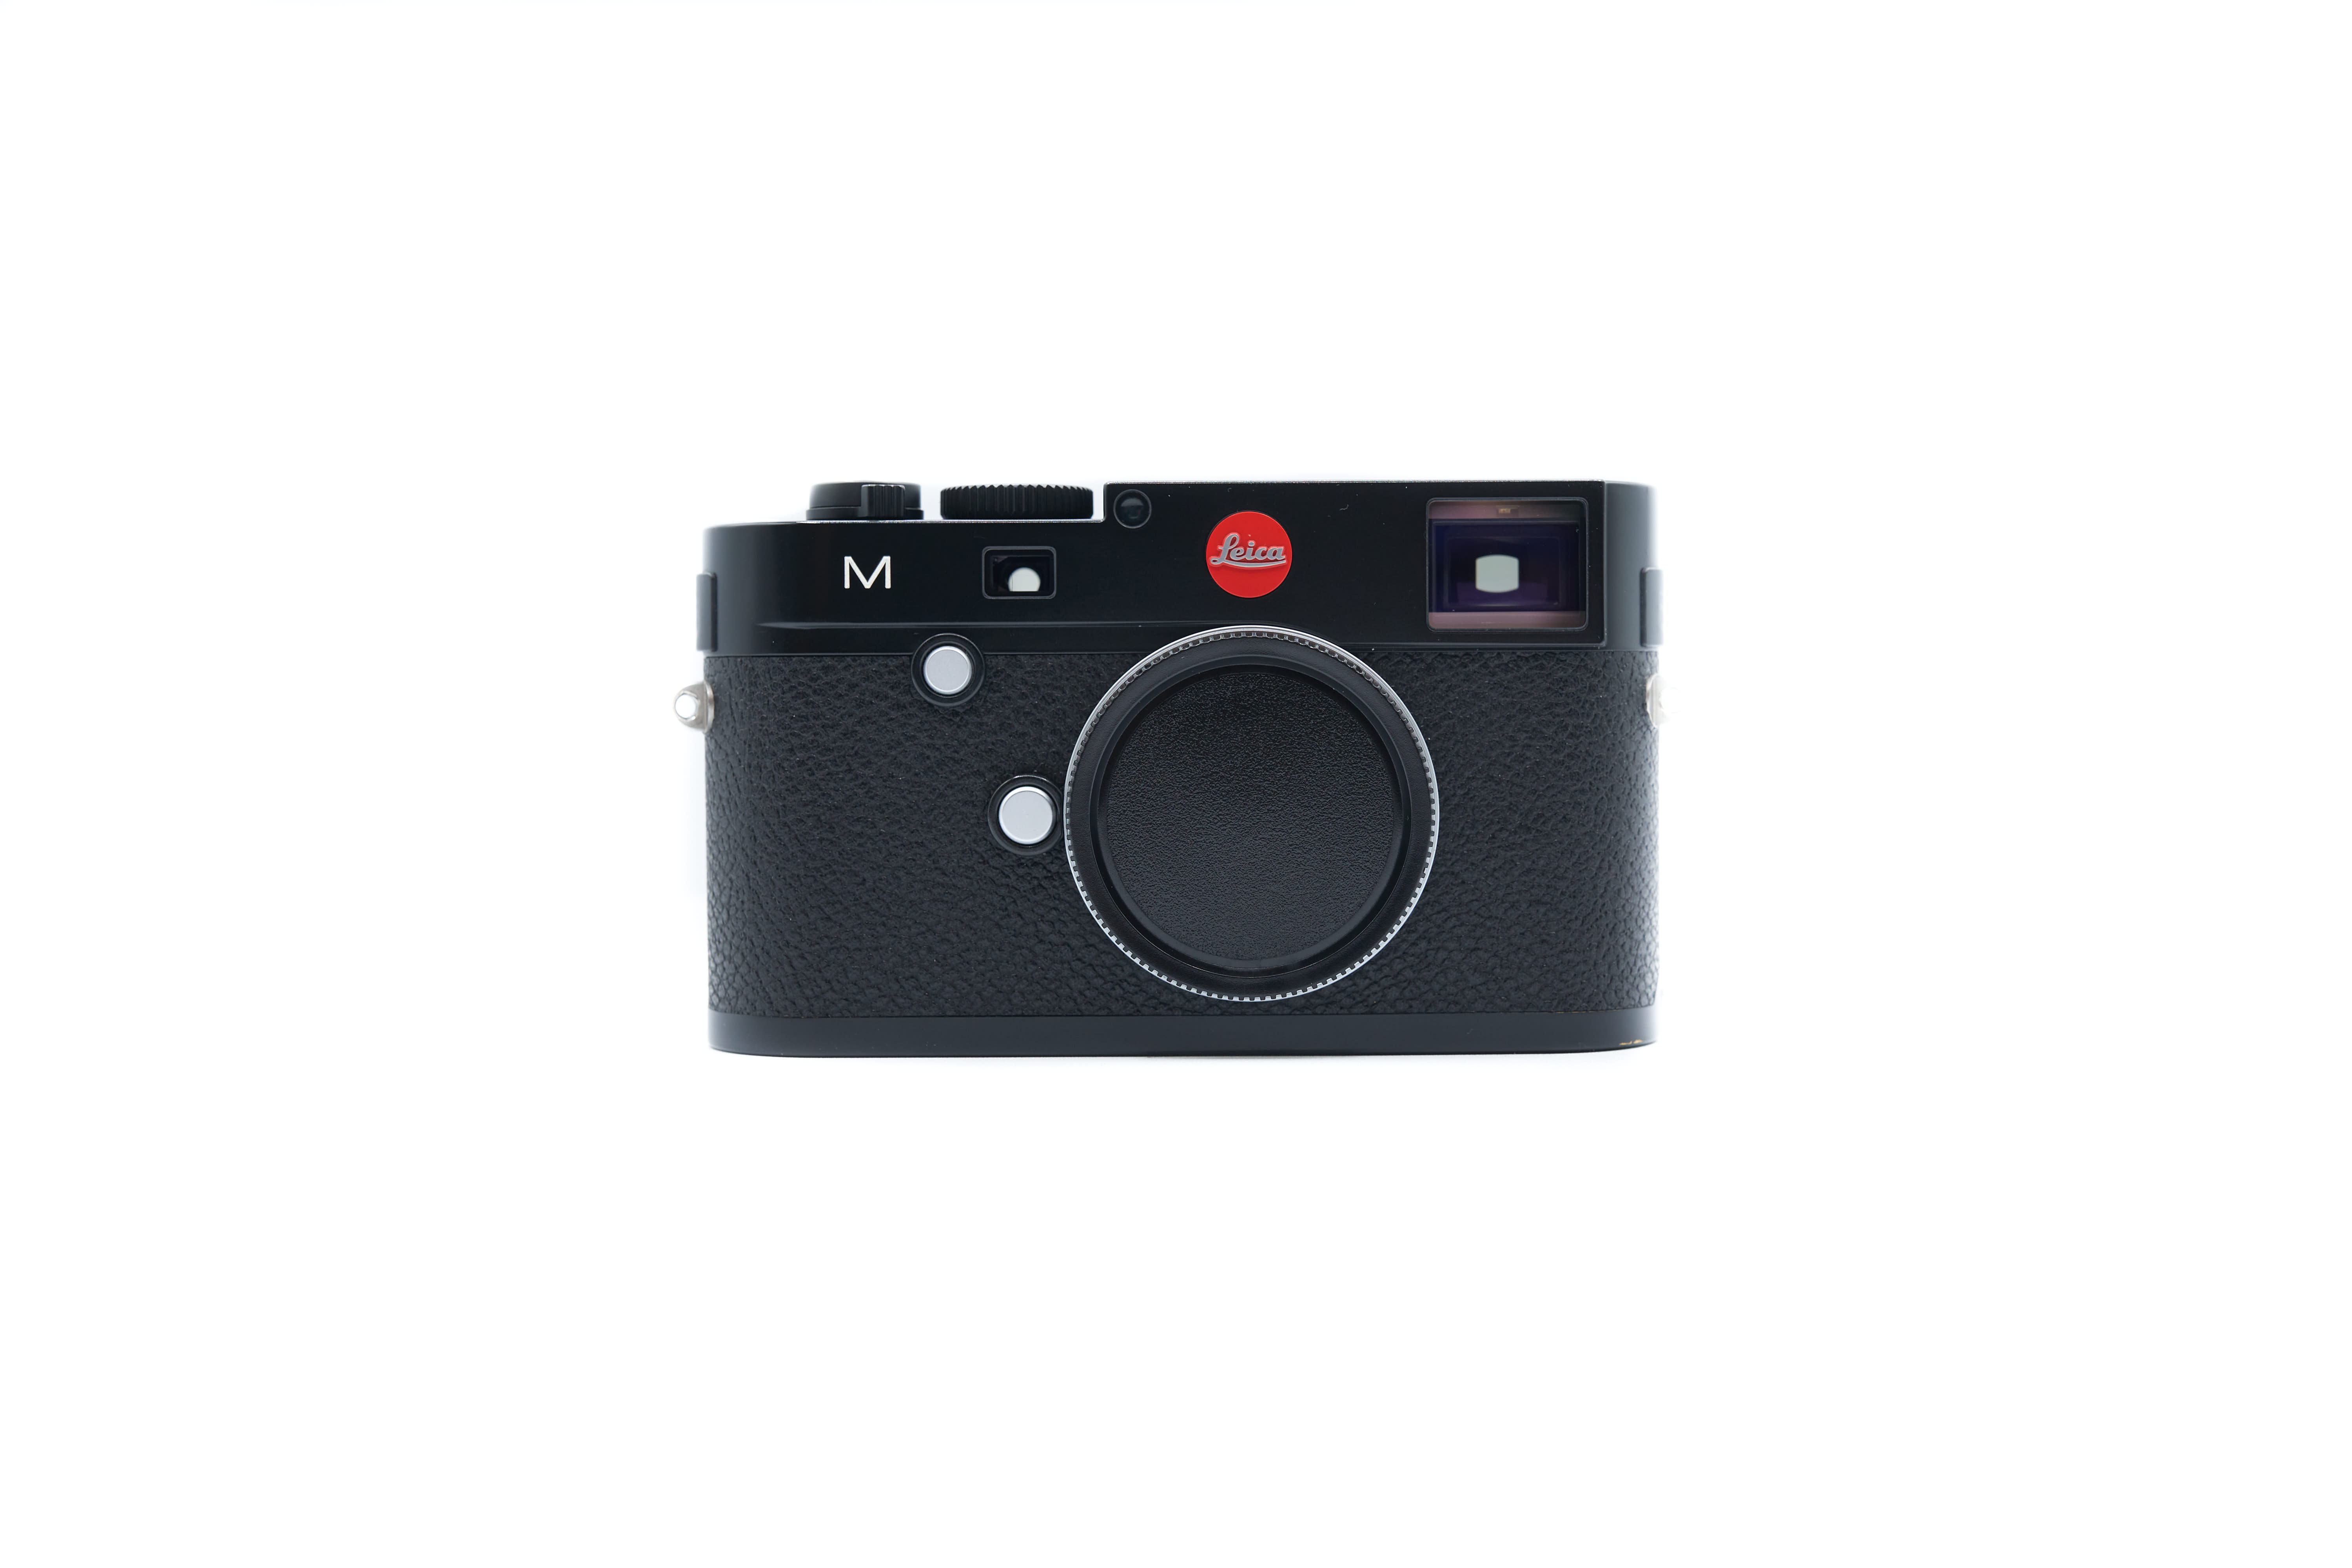 Leica M (Typ 240) Digital Rangefinder Camera Body, Black Paint Finish  {24MP} 10770 at KEH Camera